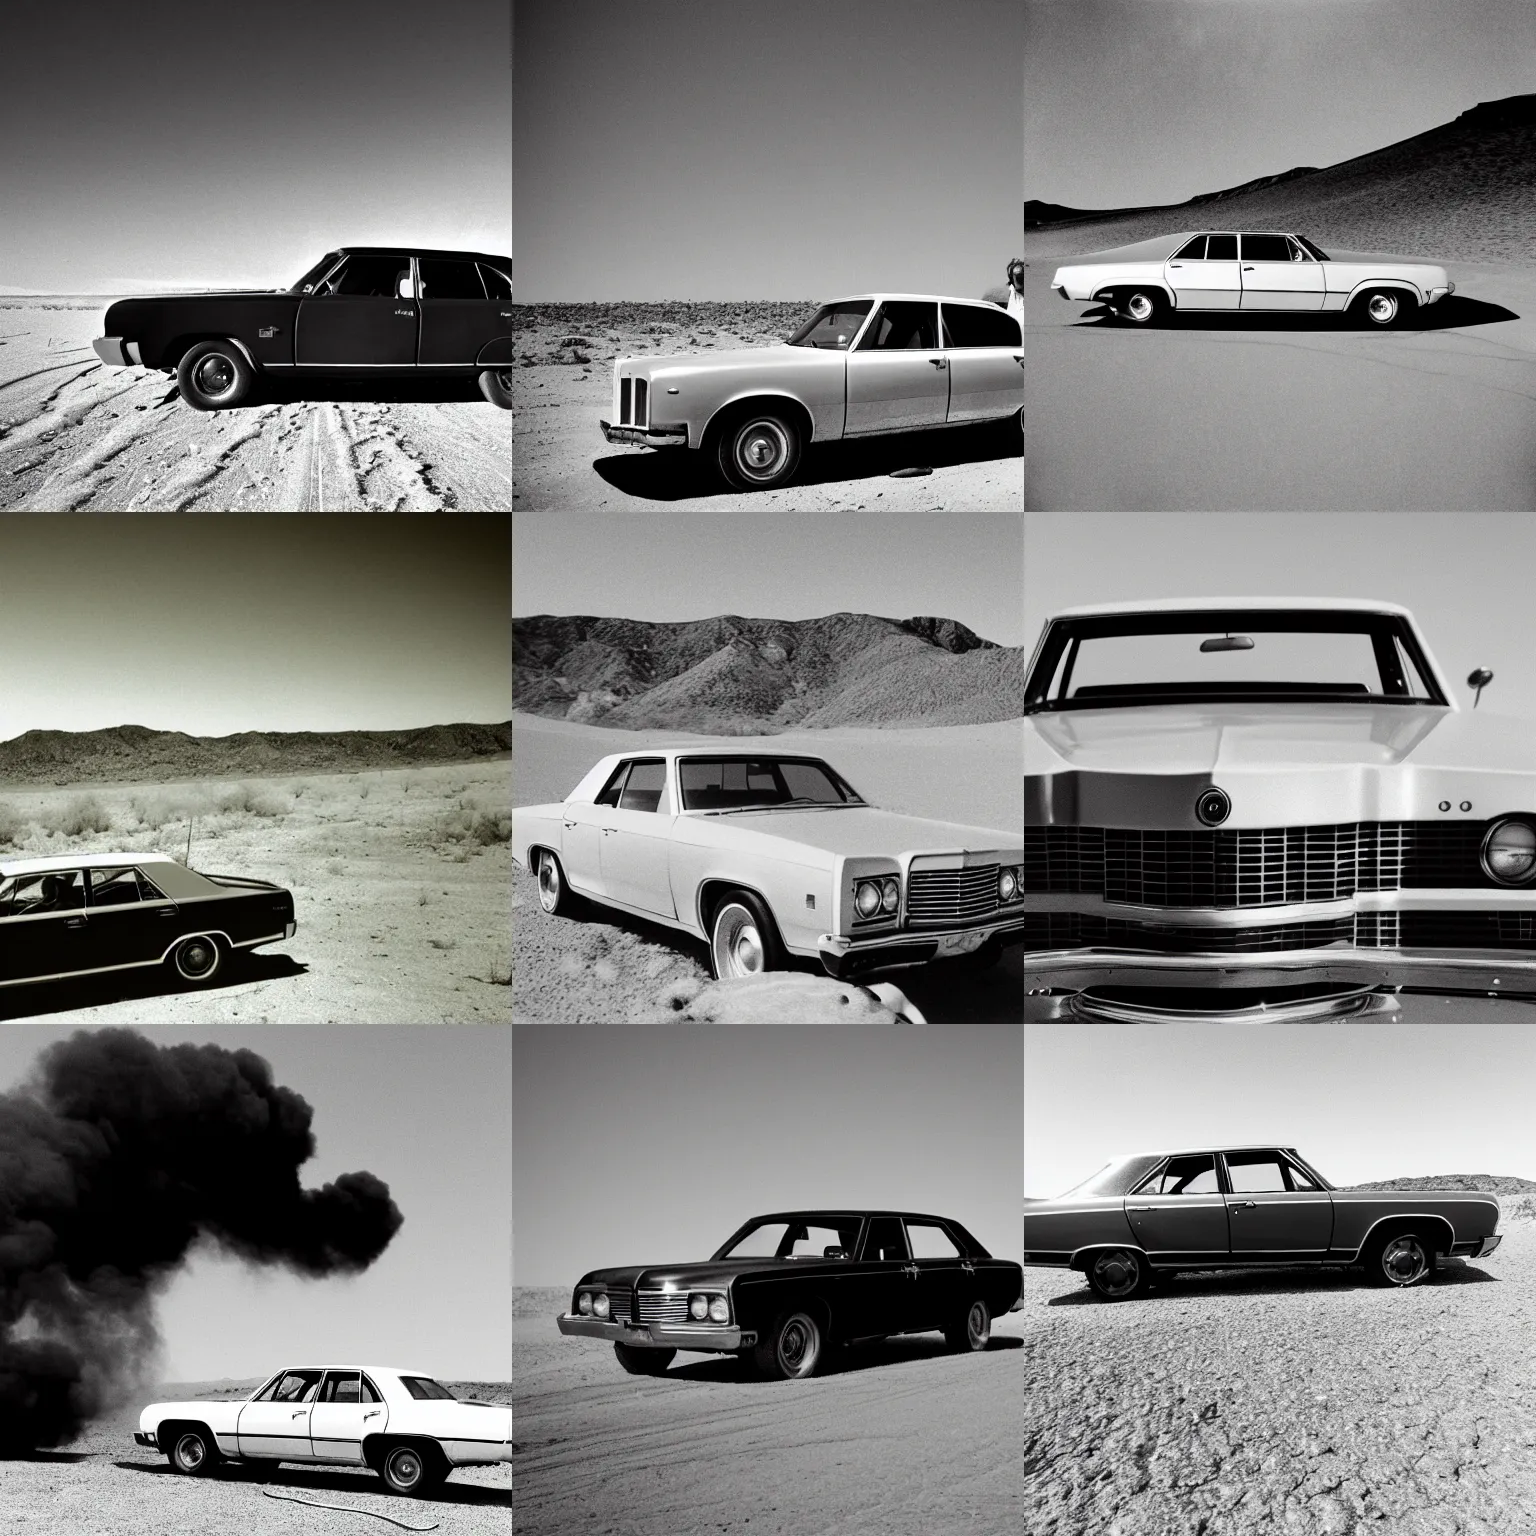 Prompt: 1970's sedan on fire in a desert, black and white, album cover